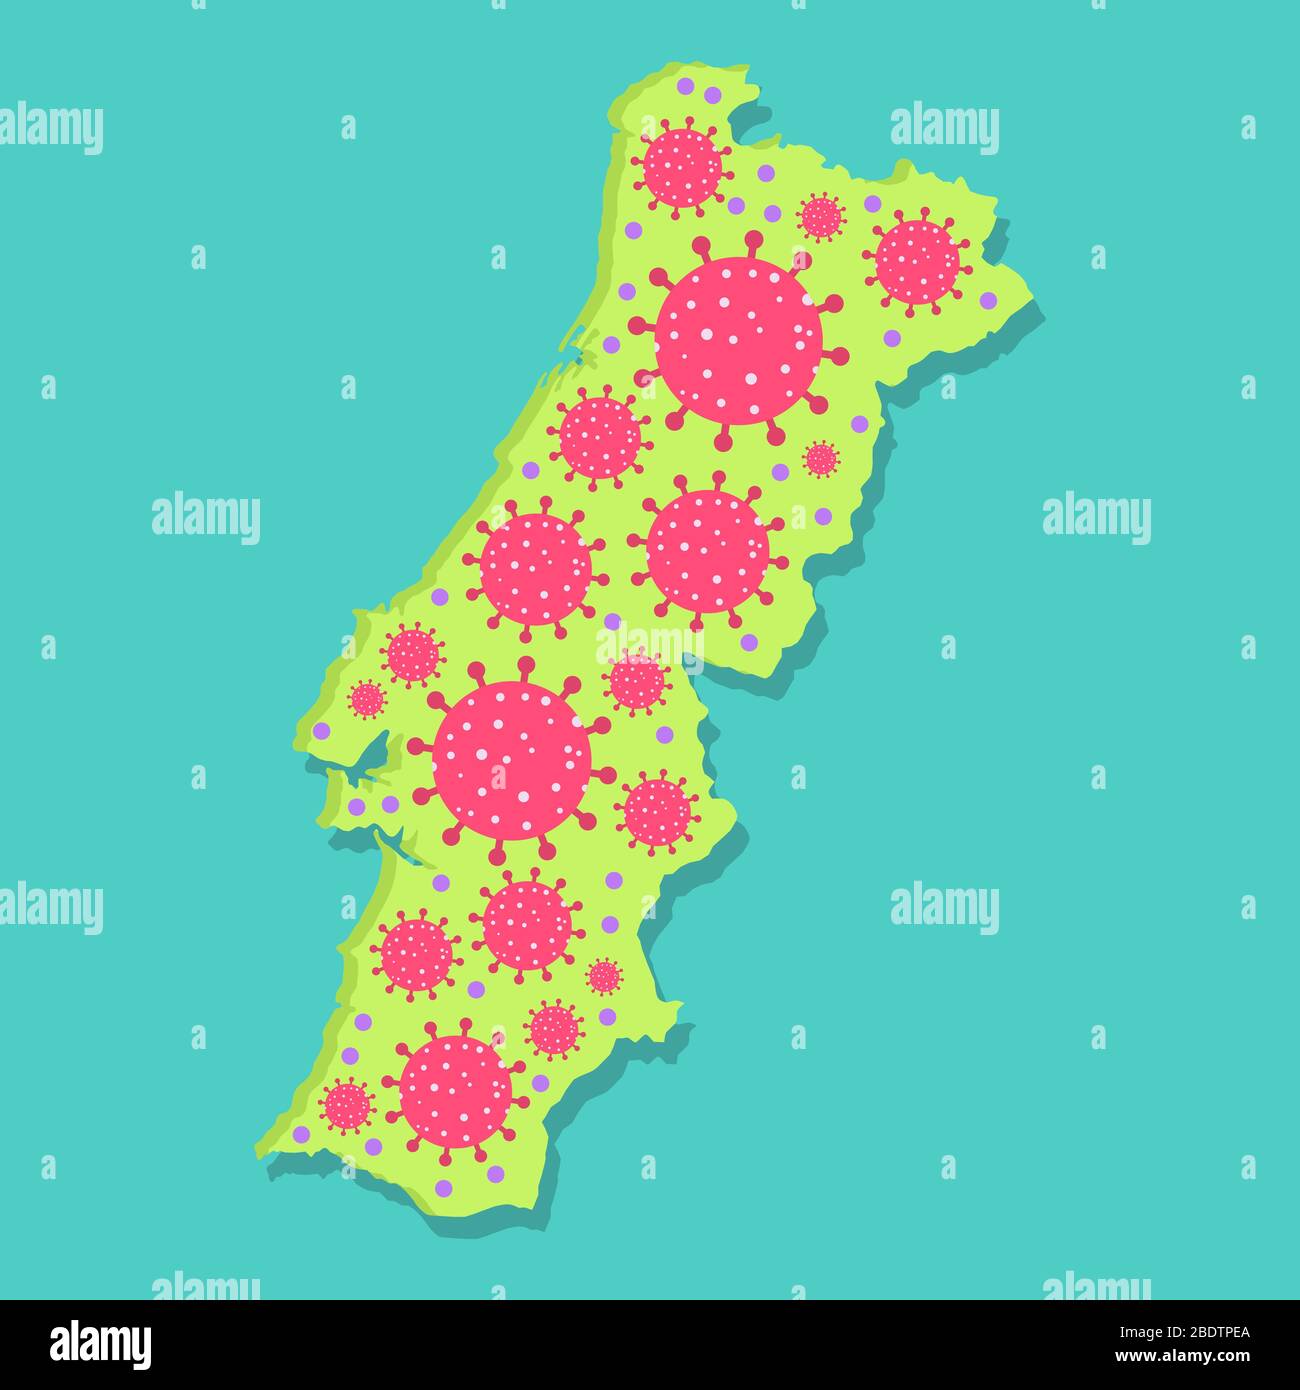 Karte von Portugal mit Virus. Coronavirus-Epidemie im Portugues-Land. Konzeptionell. Stock Vektor